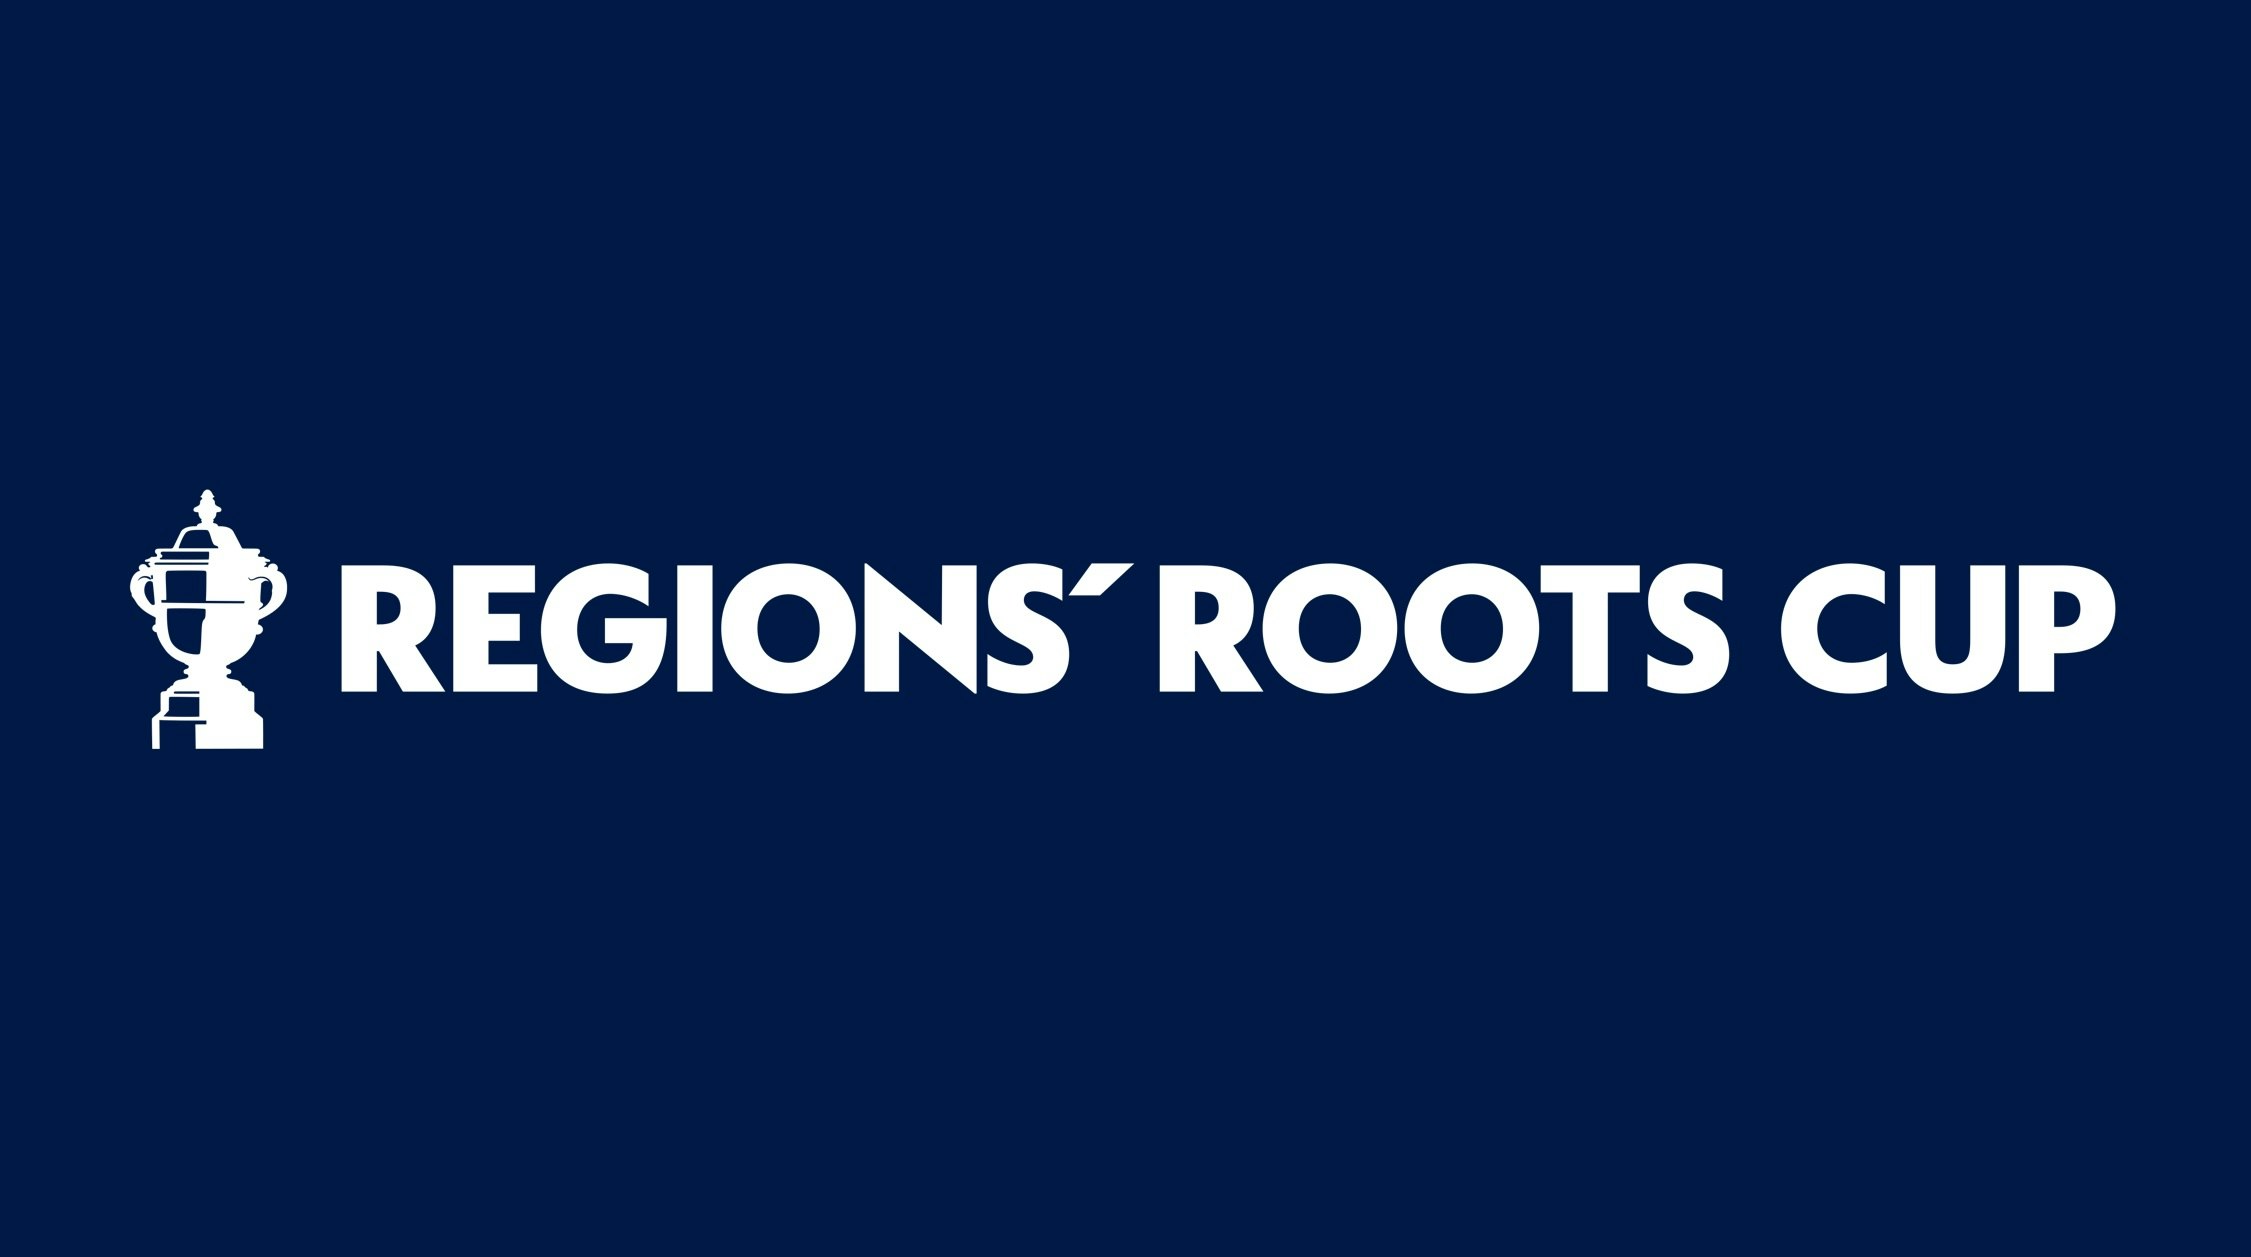 Regions' Roots Cup kuvituskuva